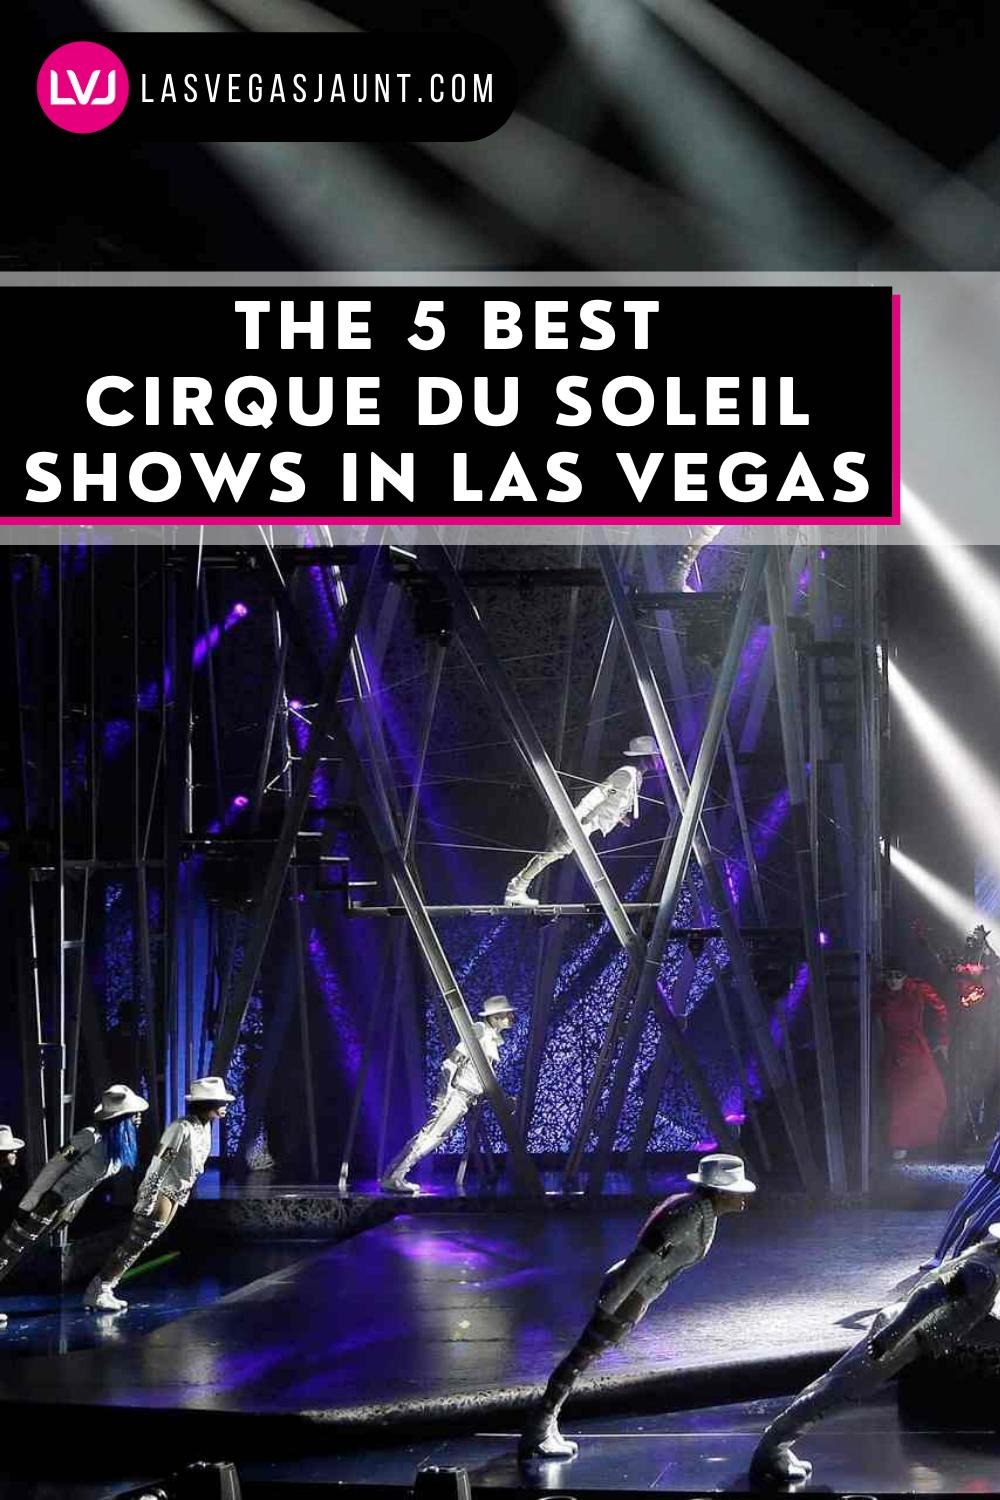 The 5 Best Cirque du Soleil Shows in Las Vegas